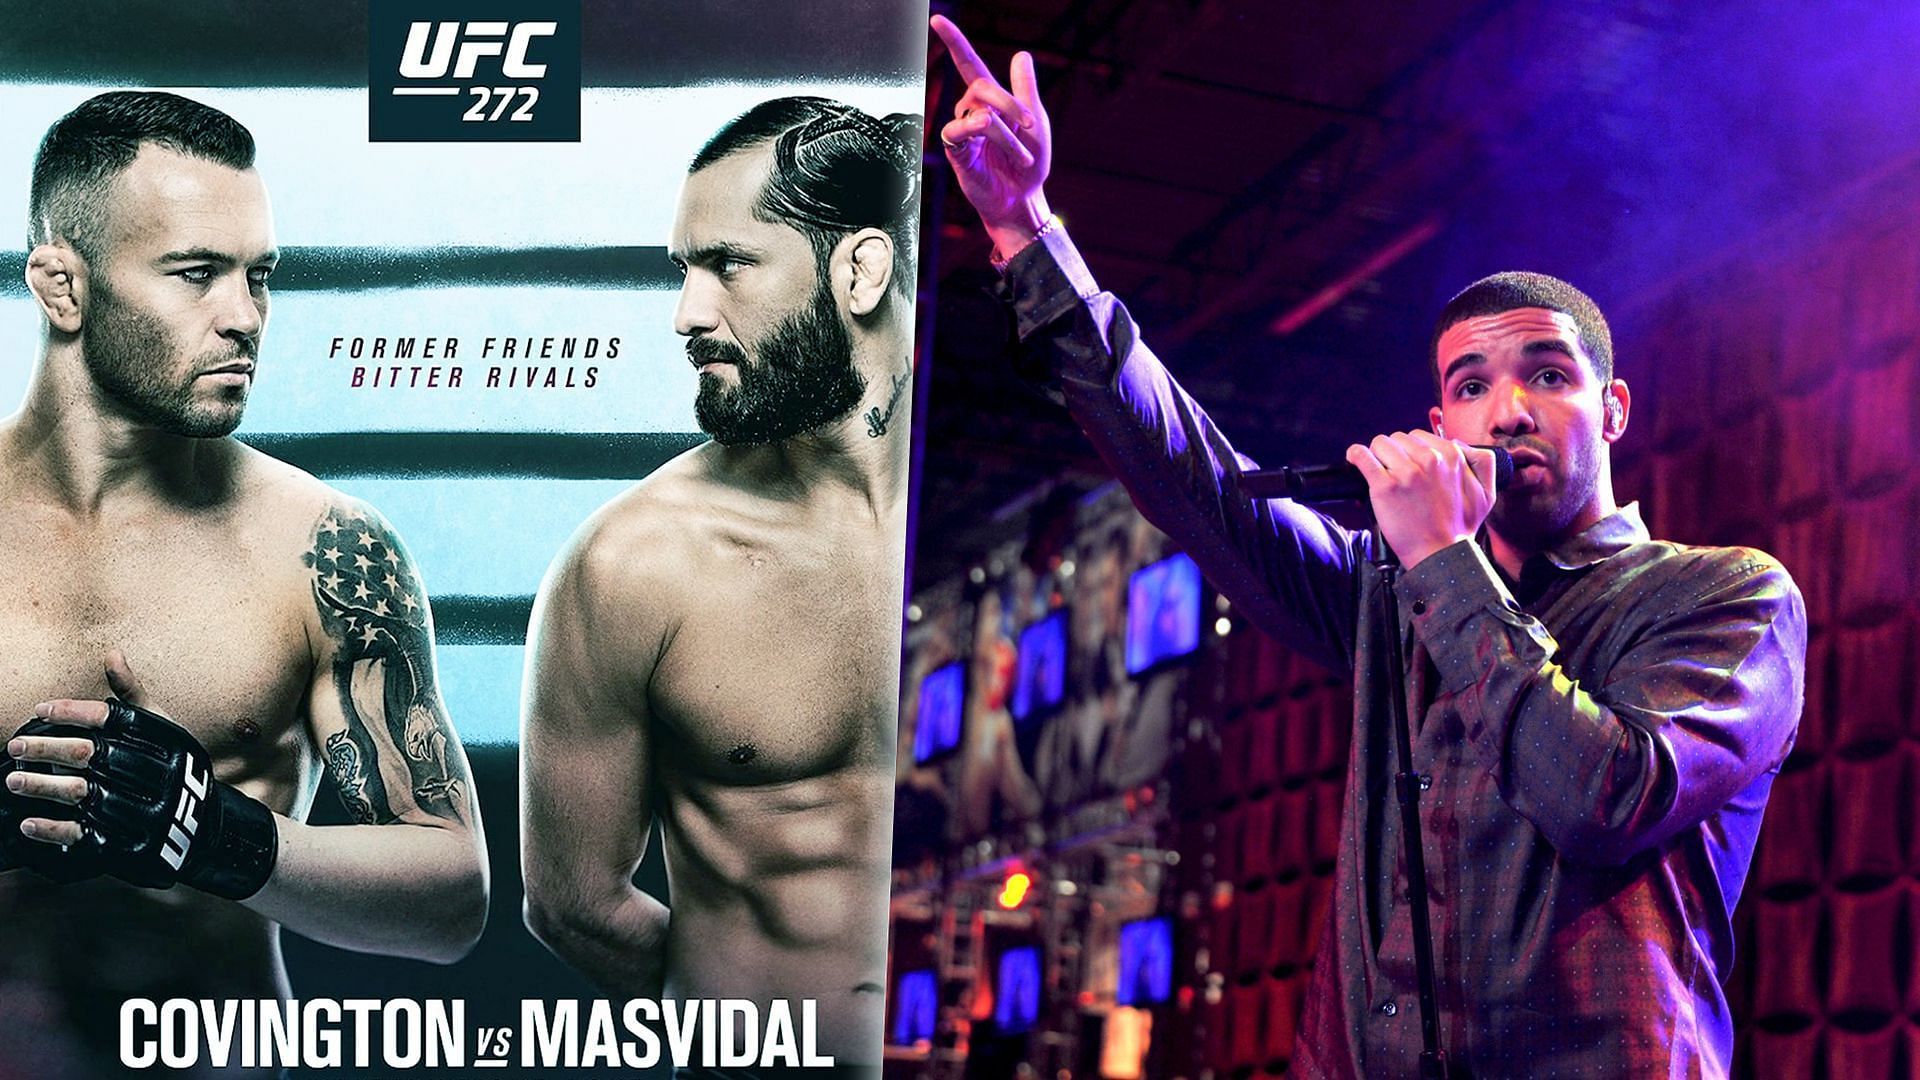 Covington vs. Masvidal poster (L) via Instagram @ufc and Drake (R) via Getty